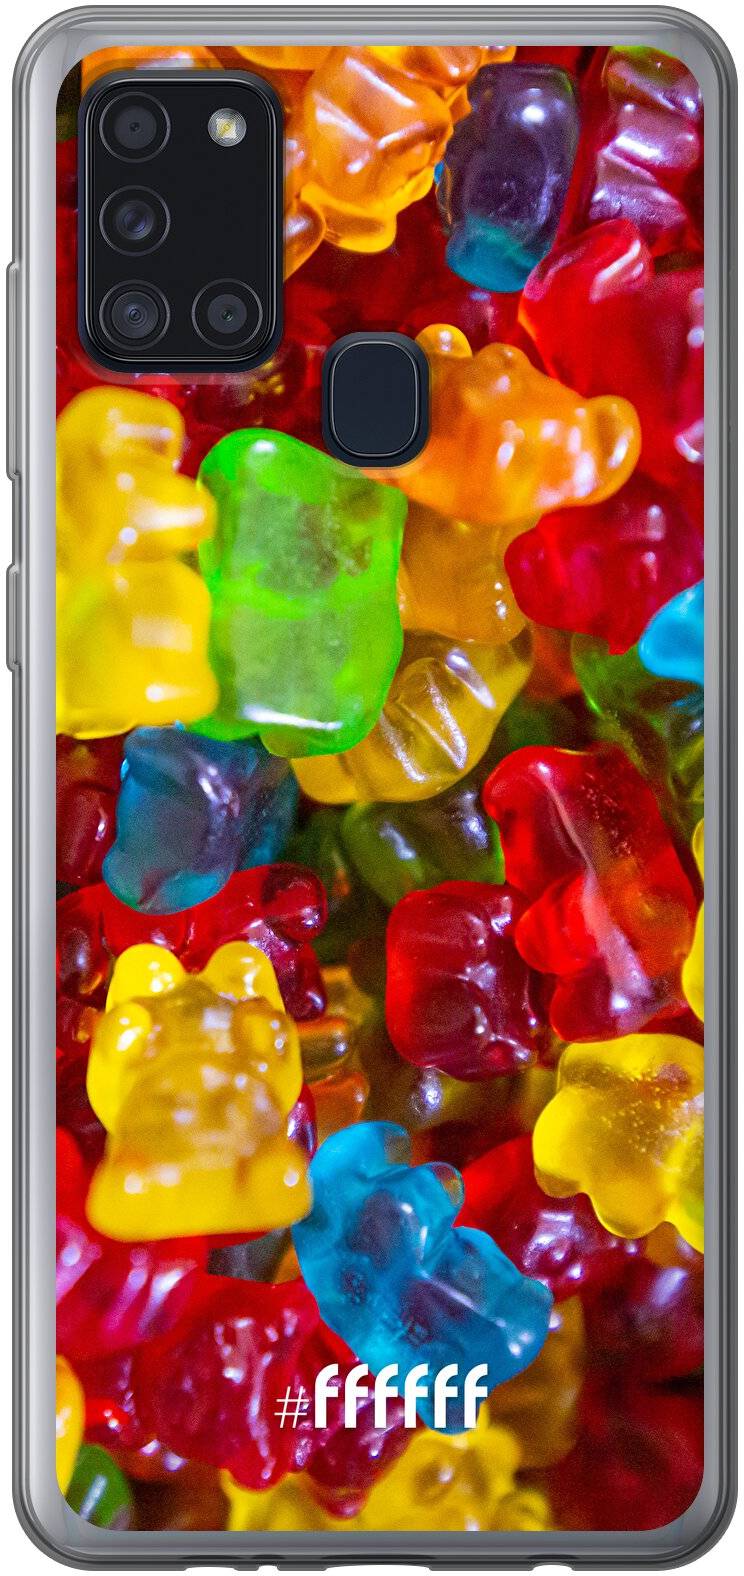 Gummy Bears Galaxy A21s